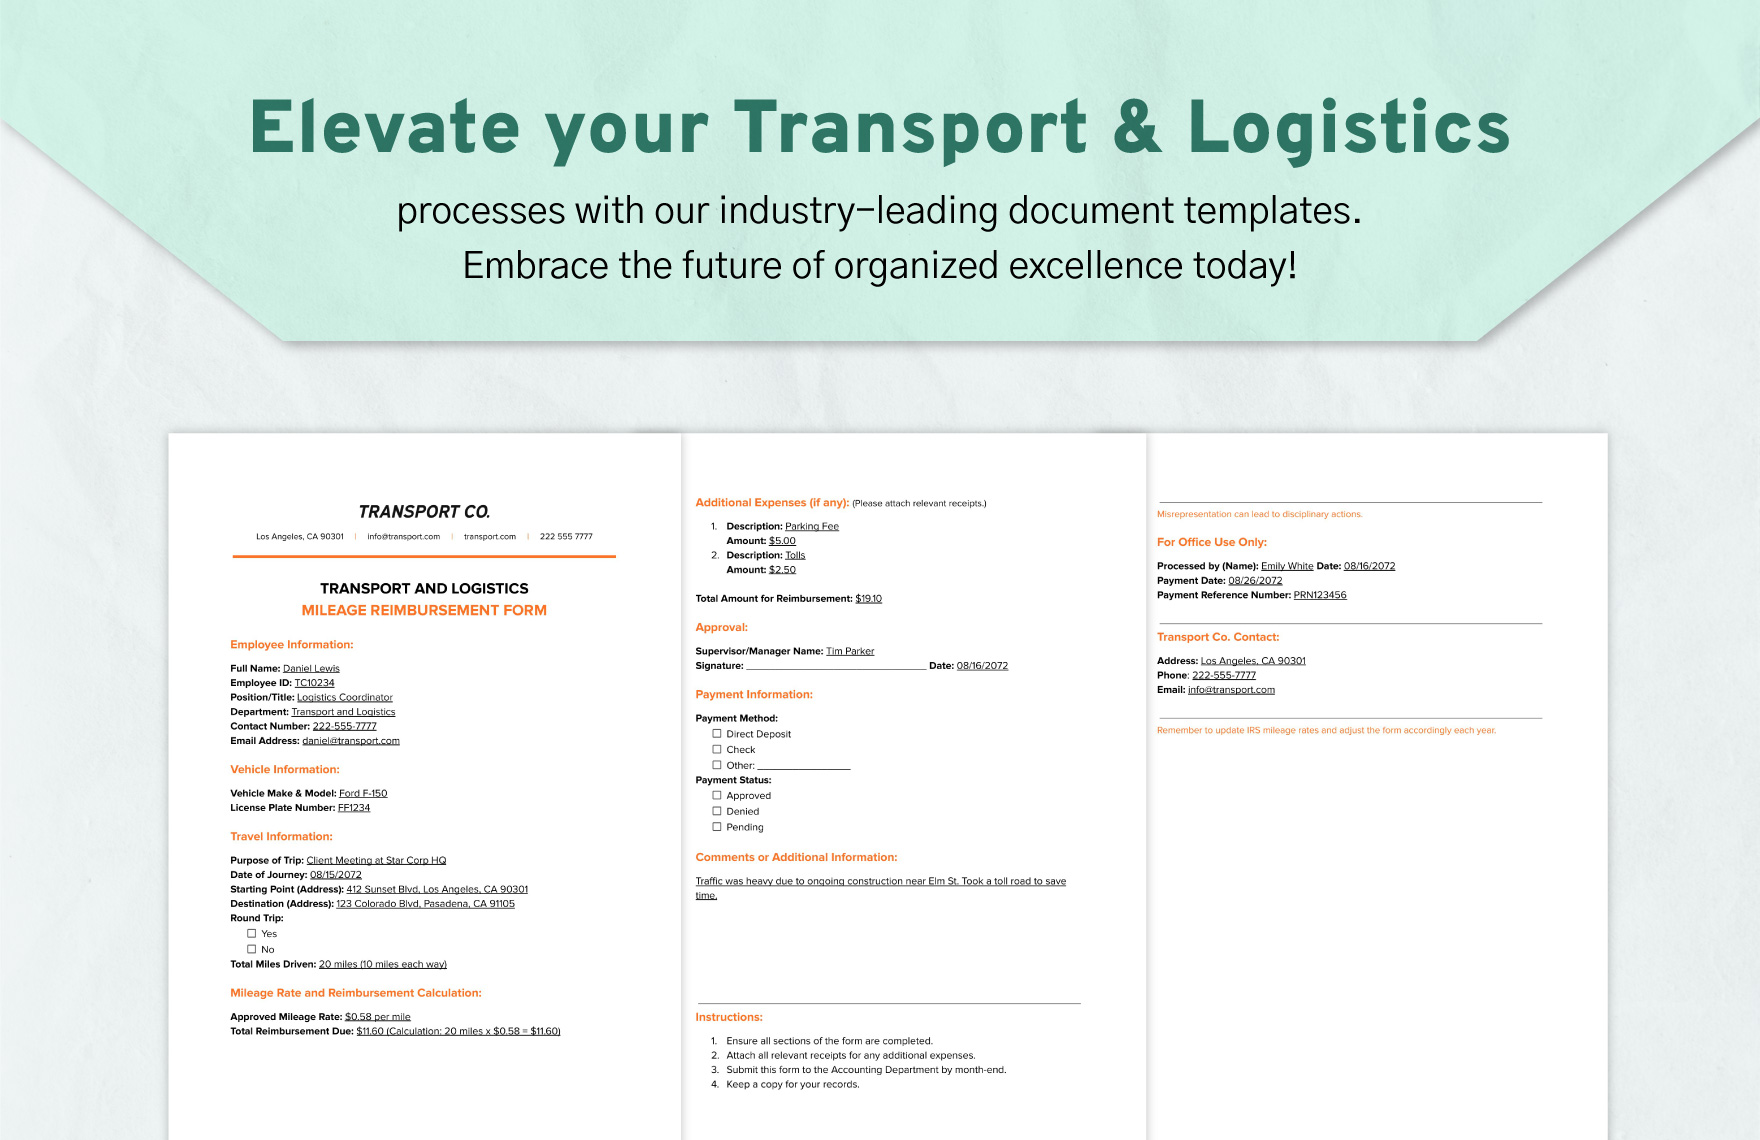 Transport and Logistics Mileage Reimbursement Form Template